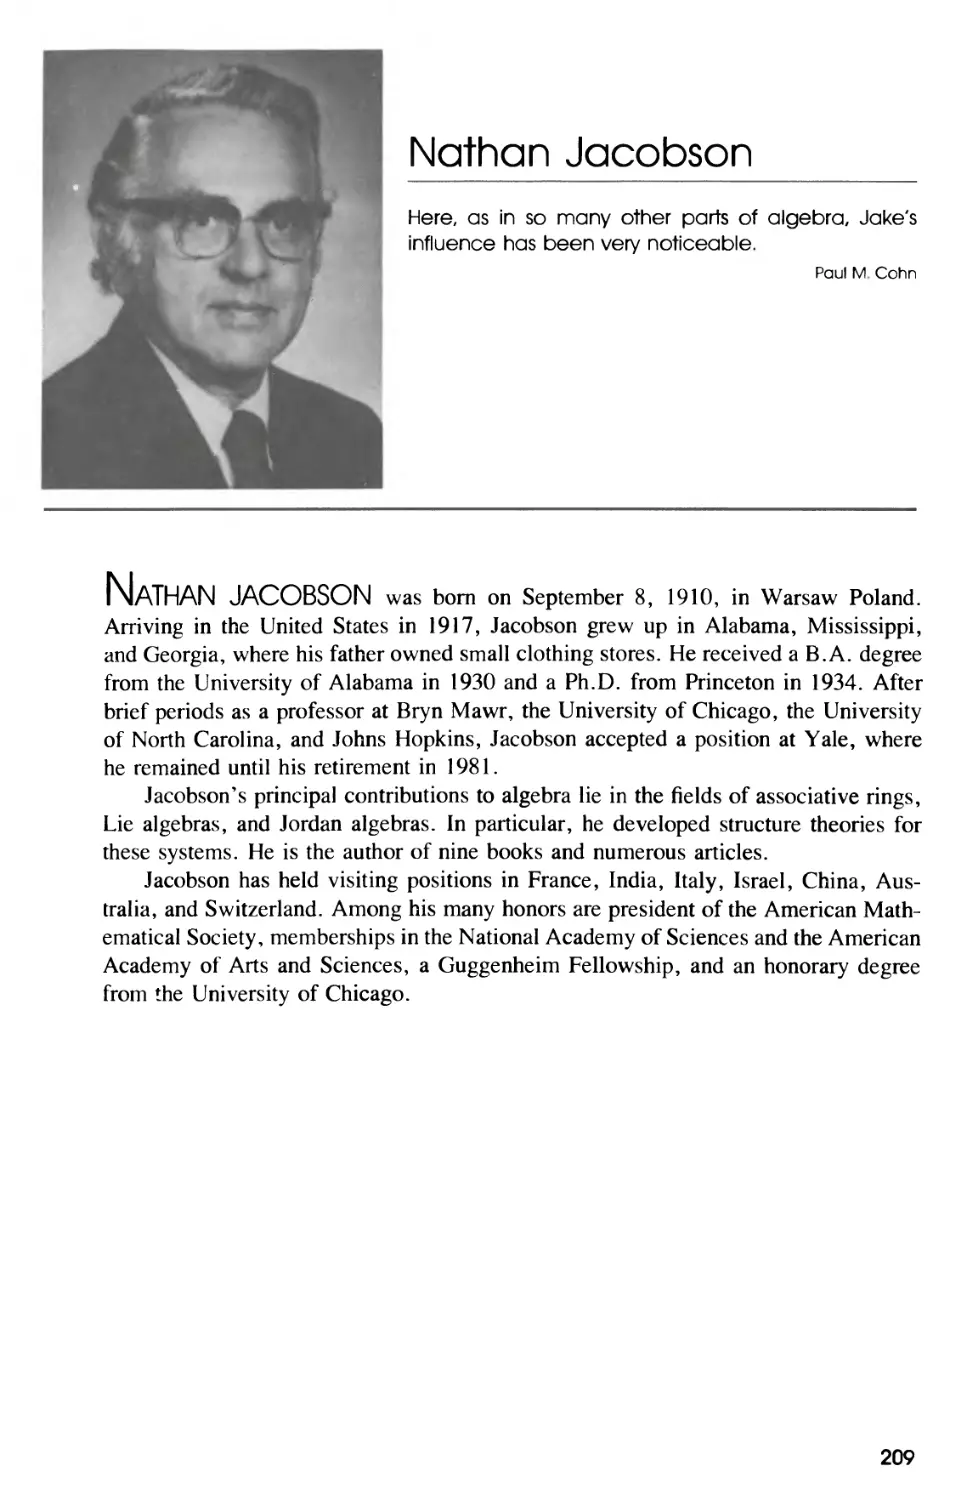 Biography of Nathan Jacobson